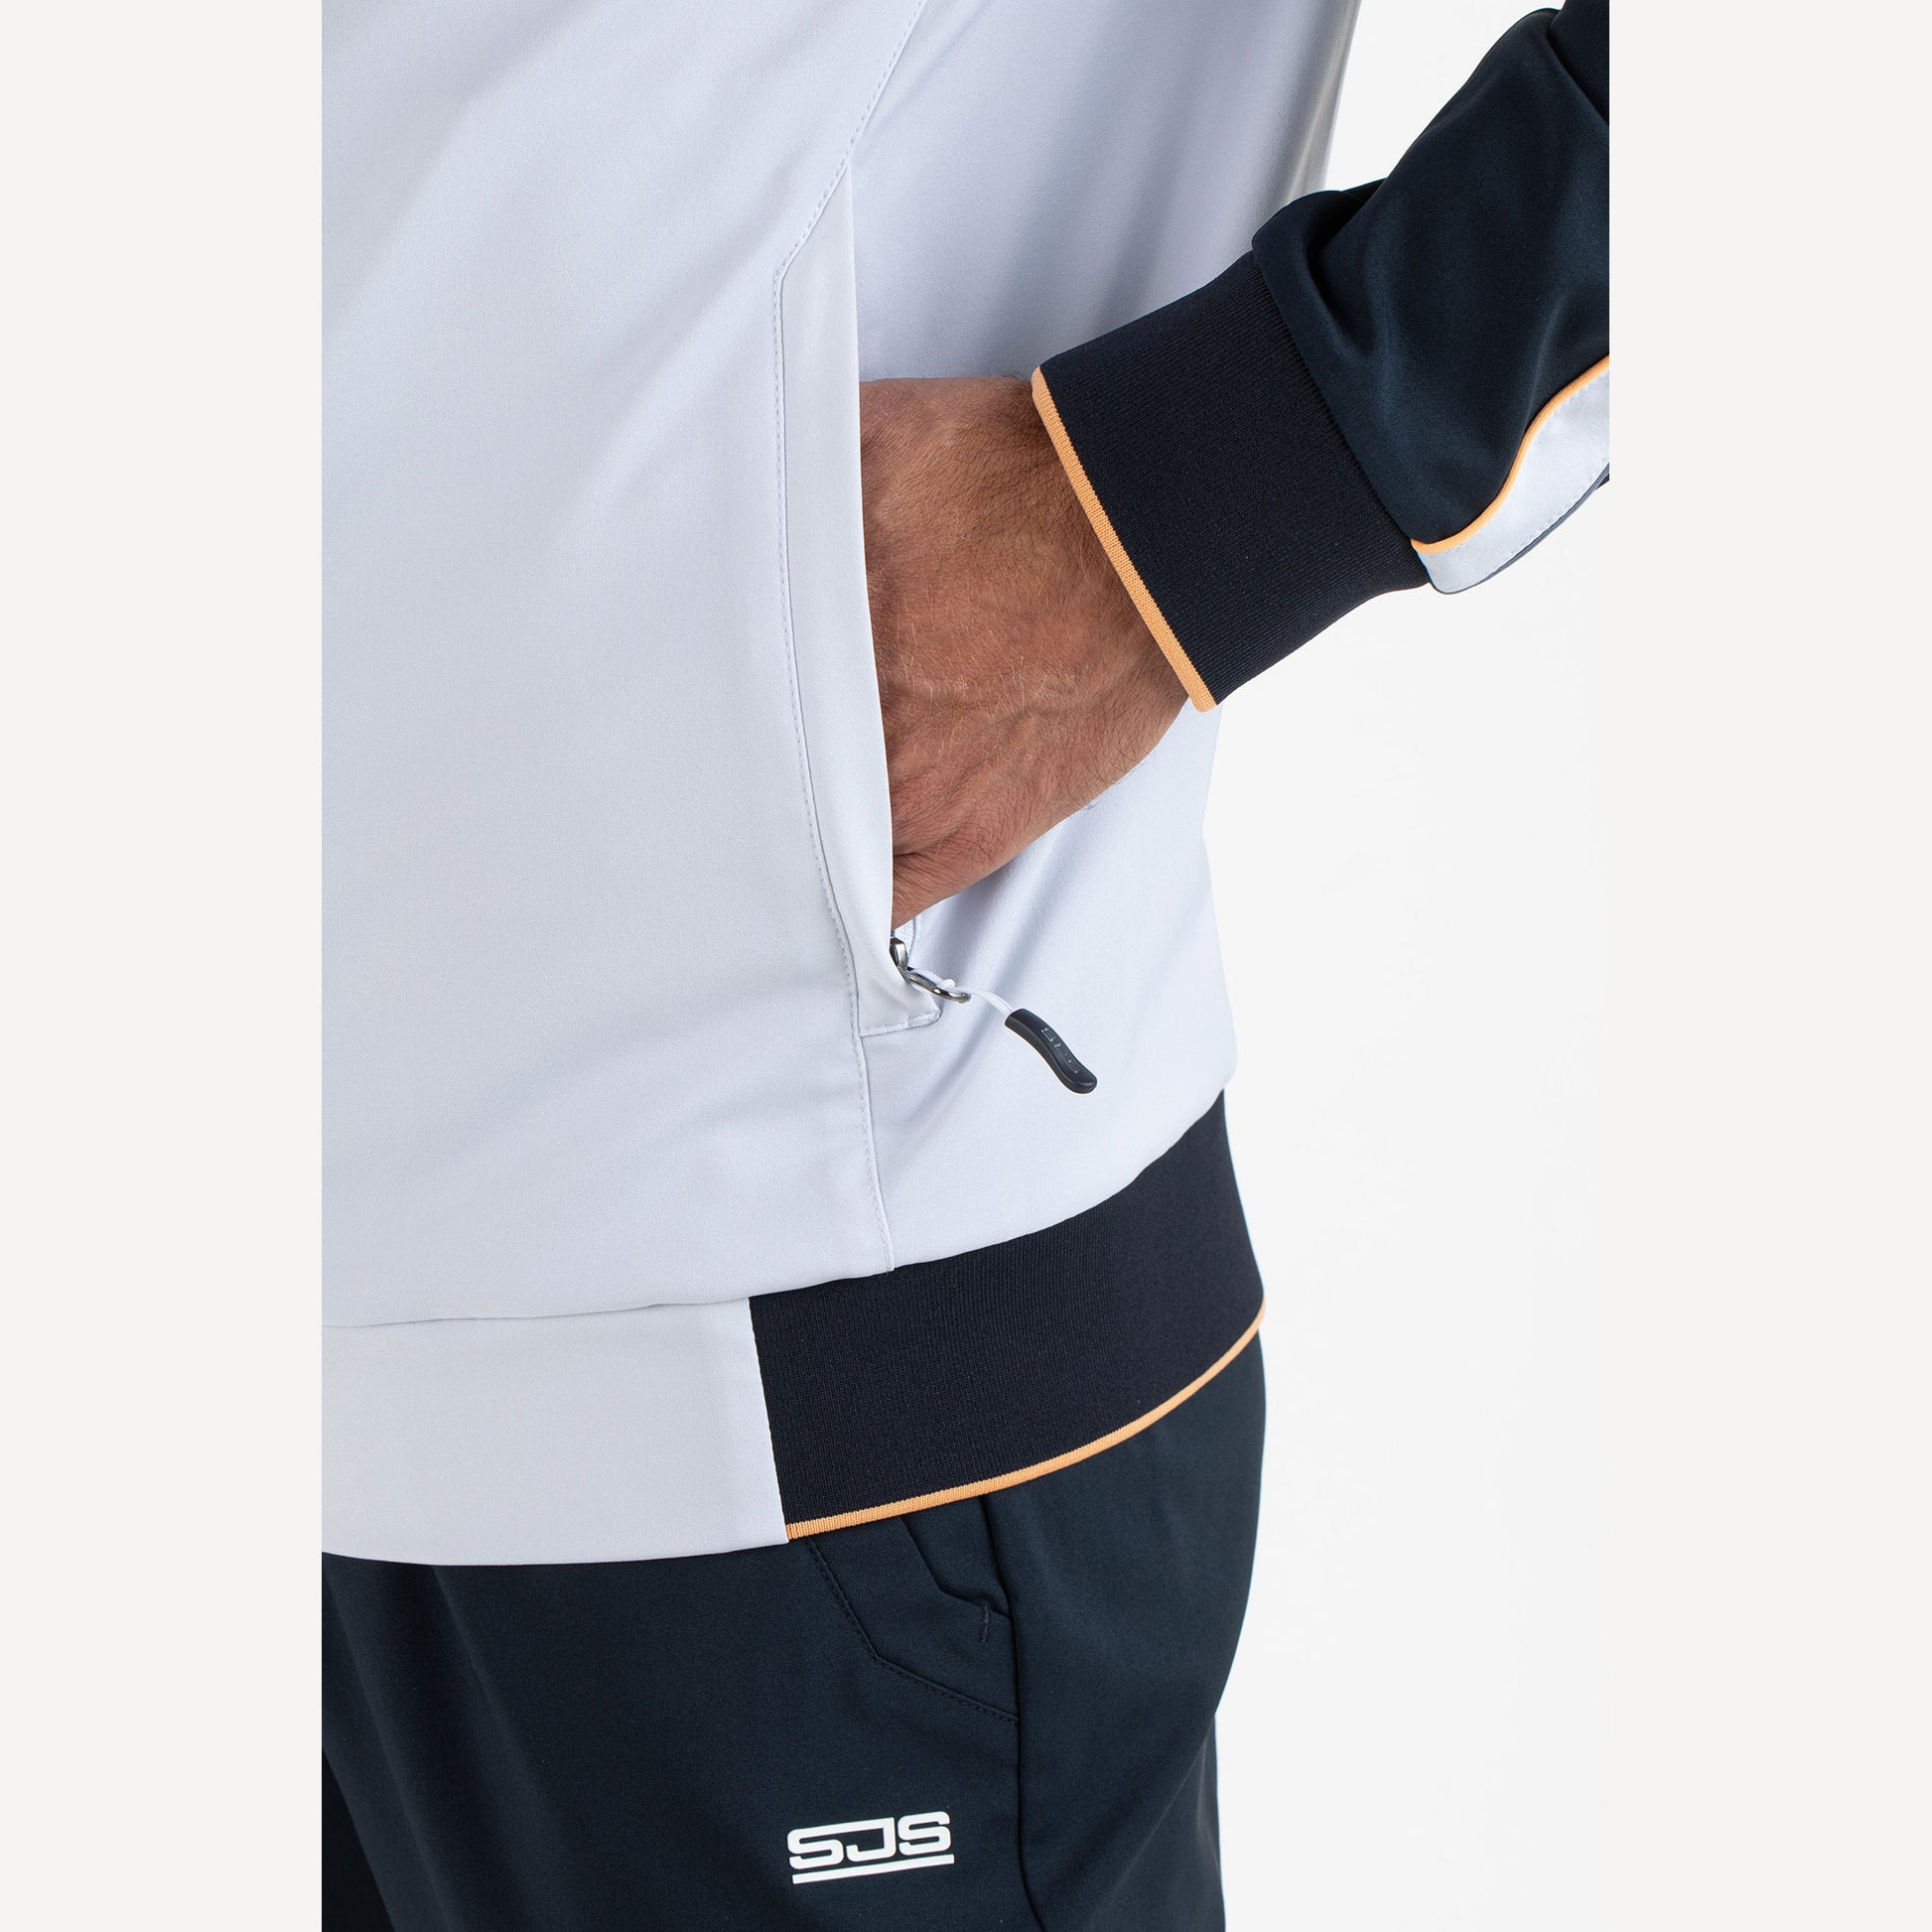 Sjeng Sports Issandro Men's Tennis Jacket White (3)